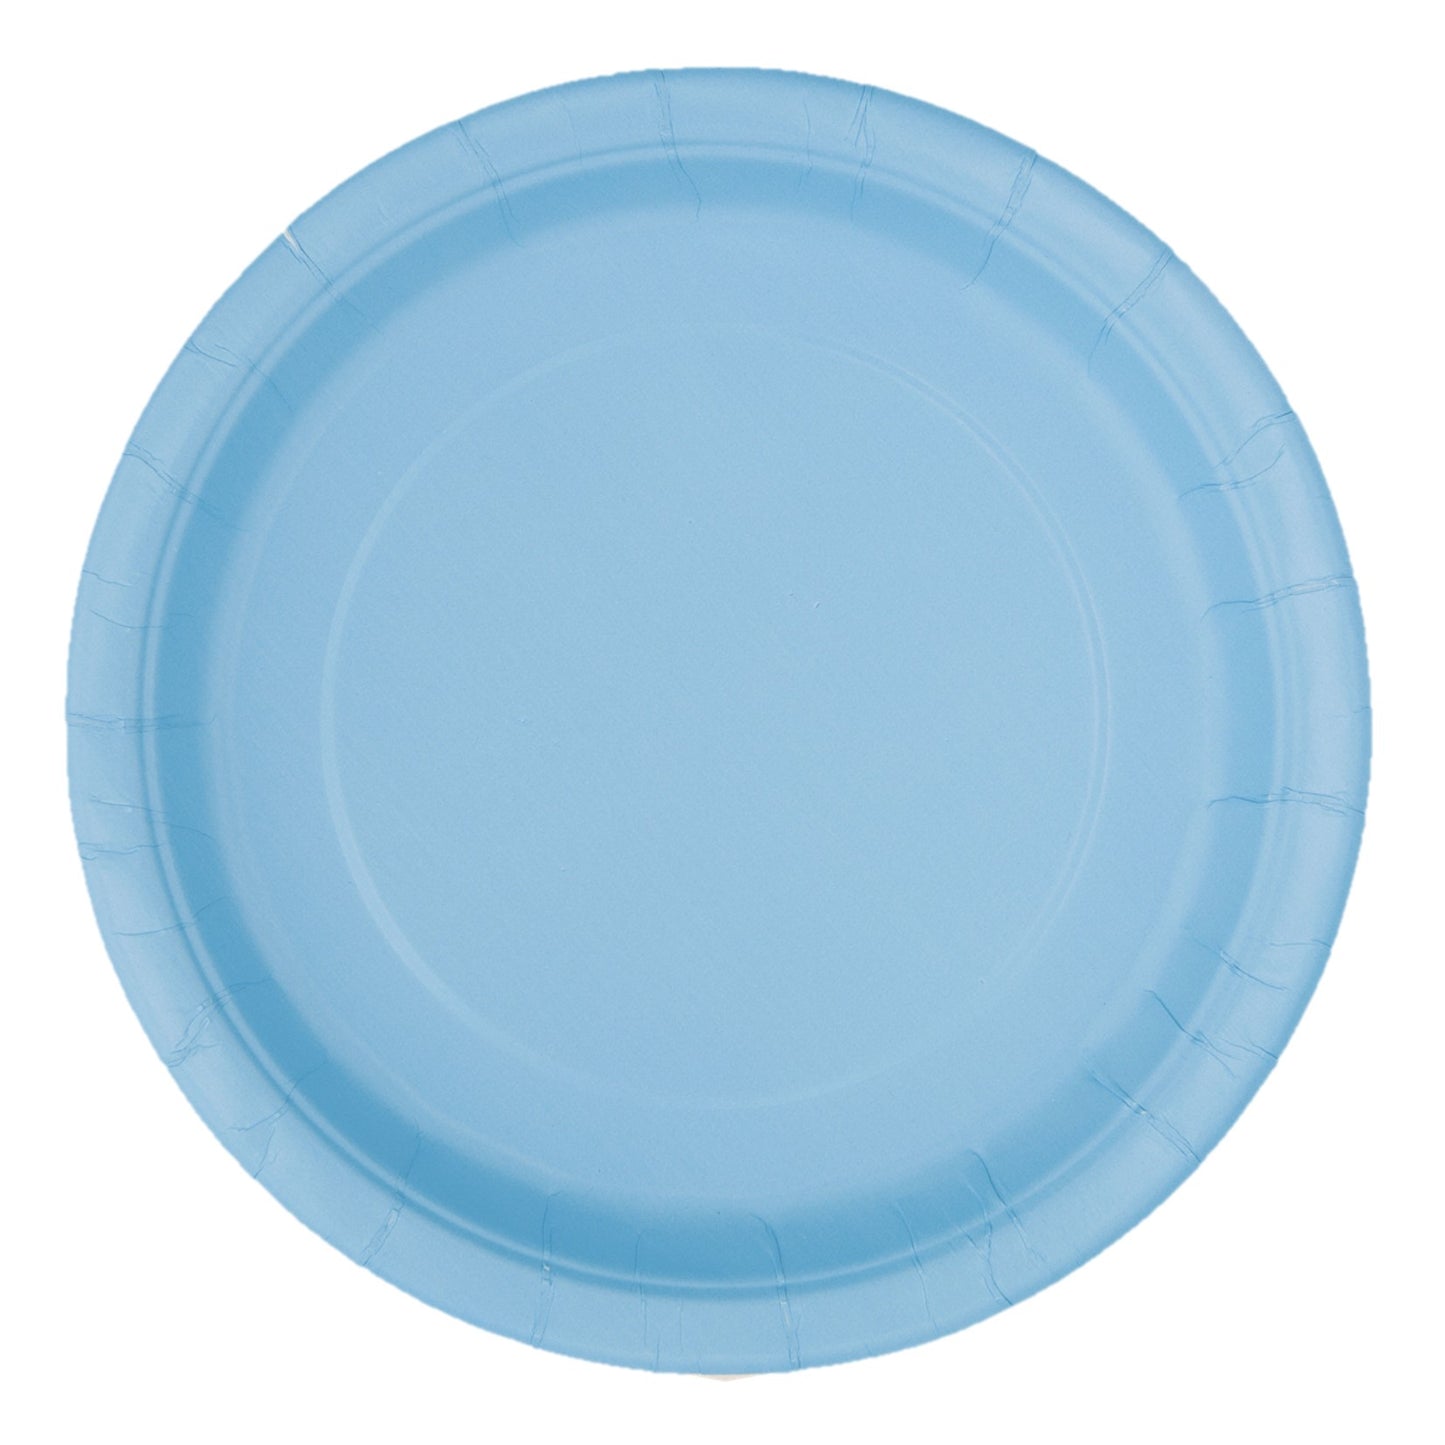 Blue Side Plates 17cm - Uk Baby Shower Co ltd